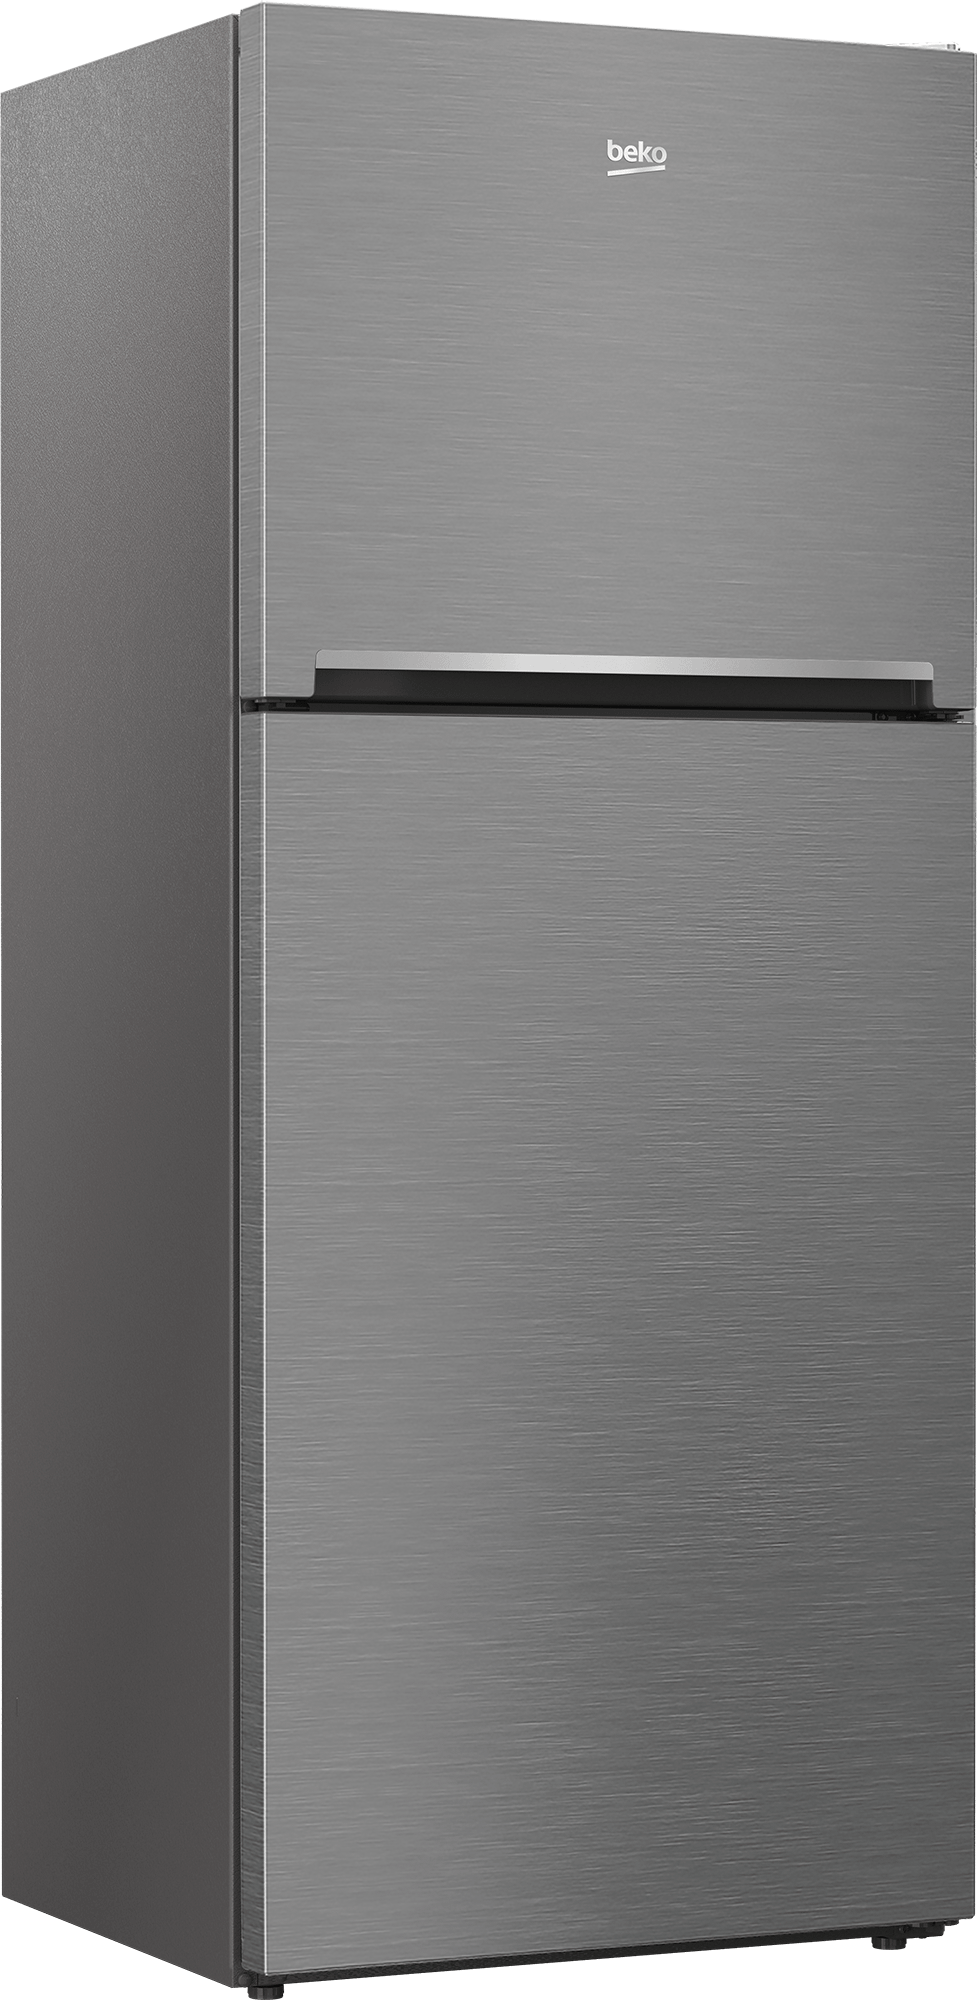 Beko 28" Freezer Top Stainless Steel Refrigerator